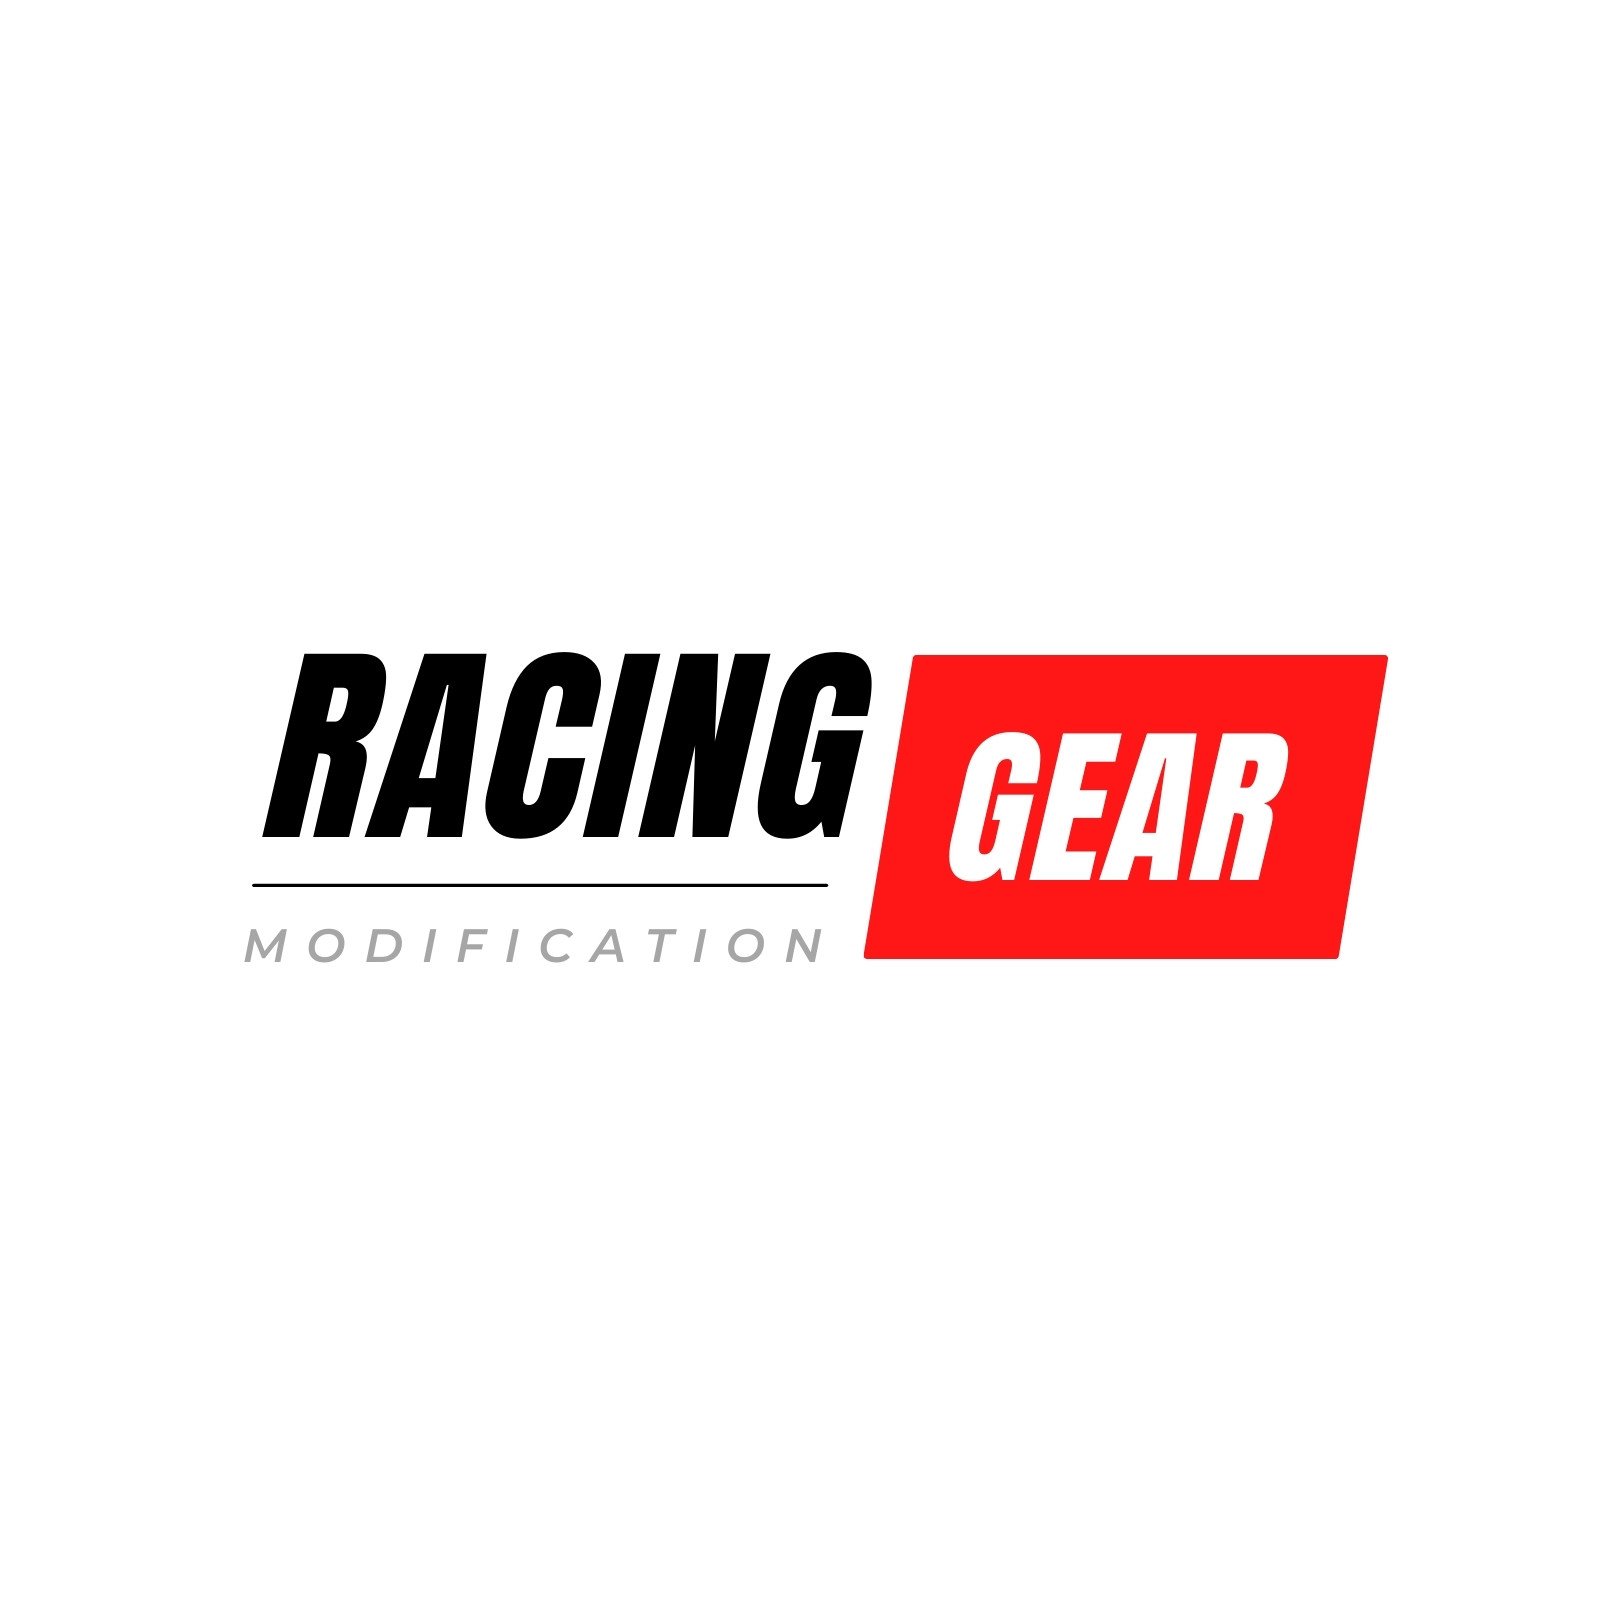 Black Red Bold Minimalist Racing Gear Logo